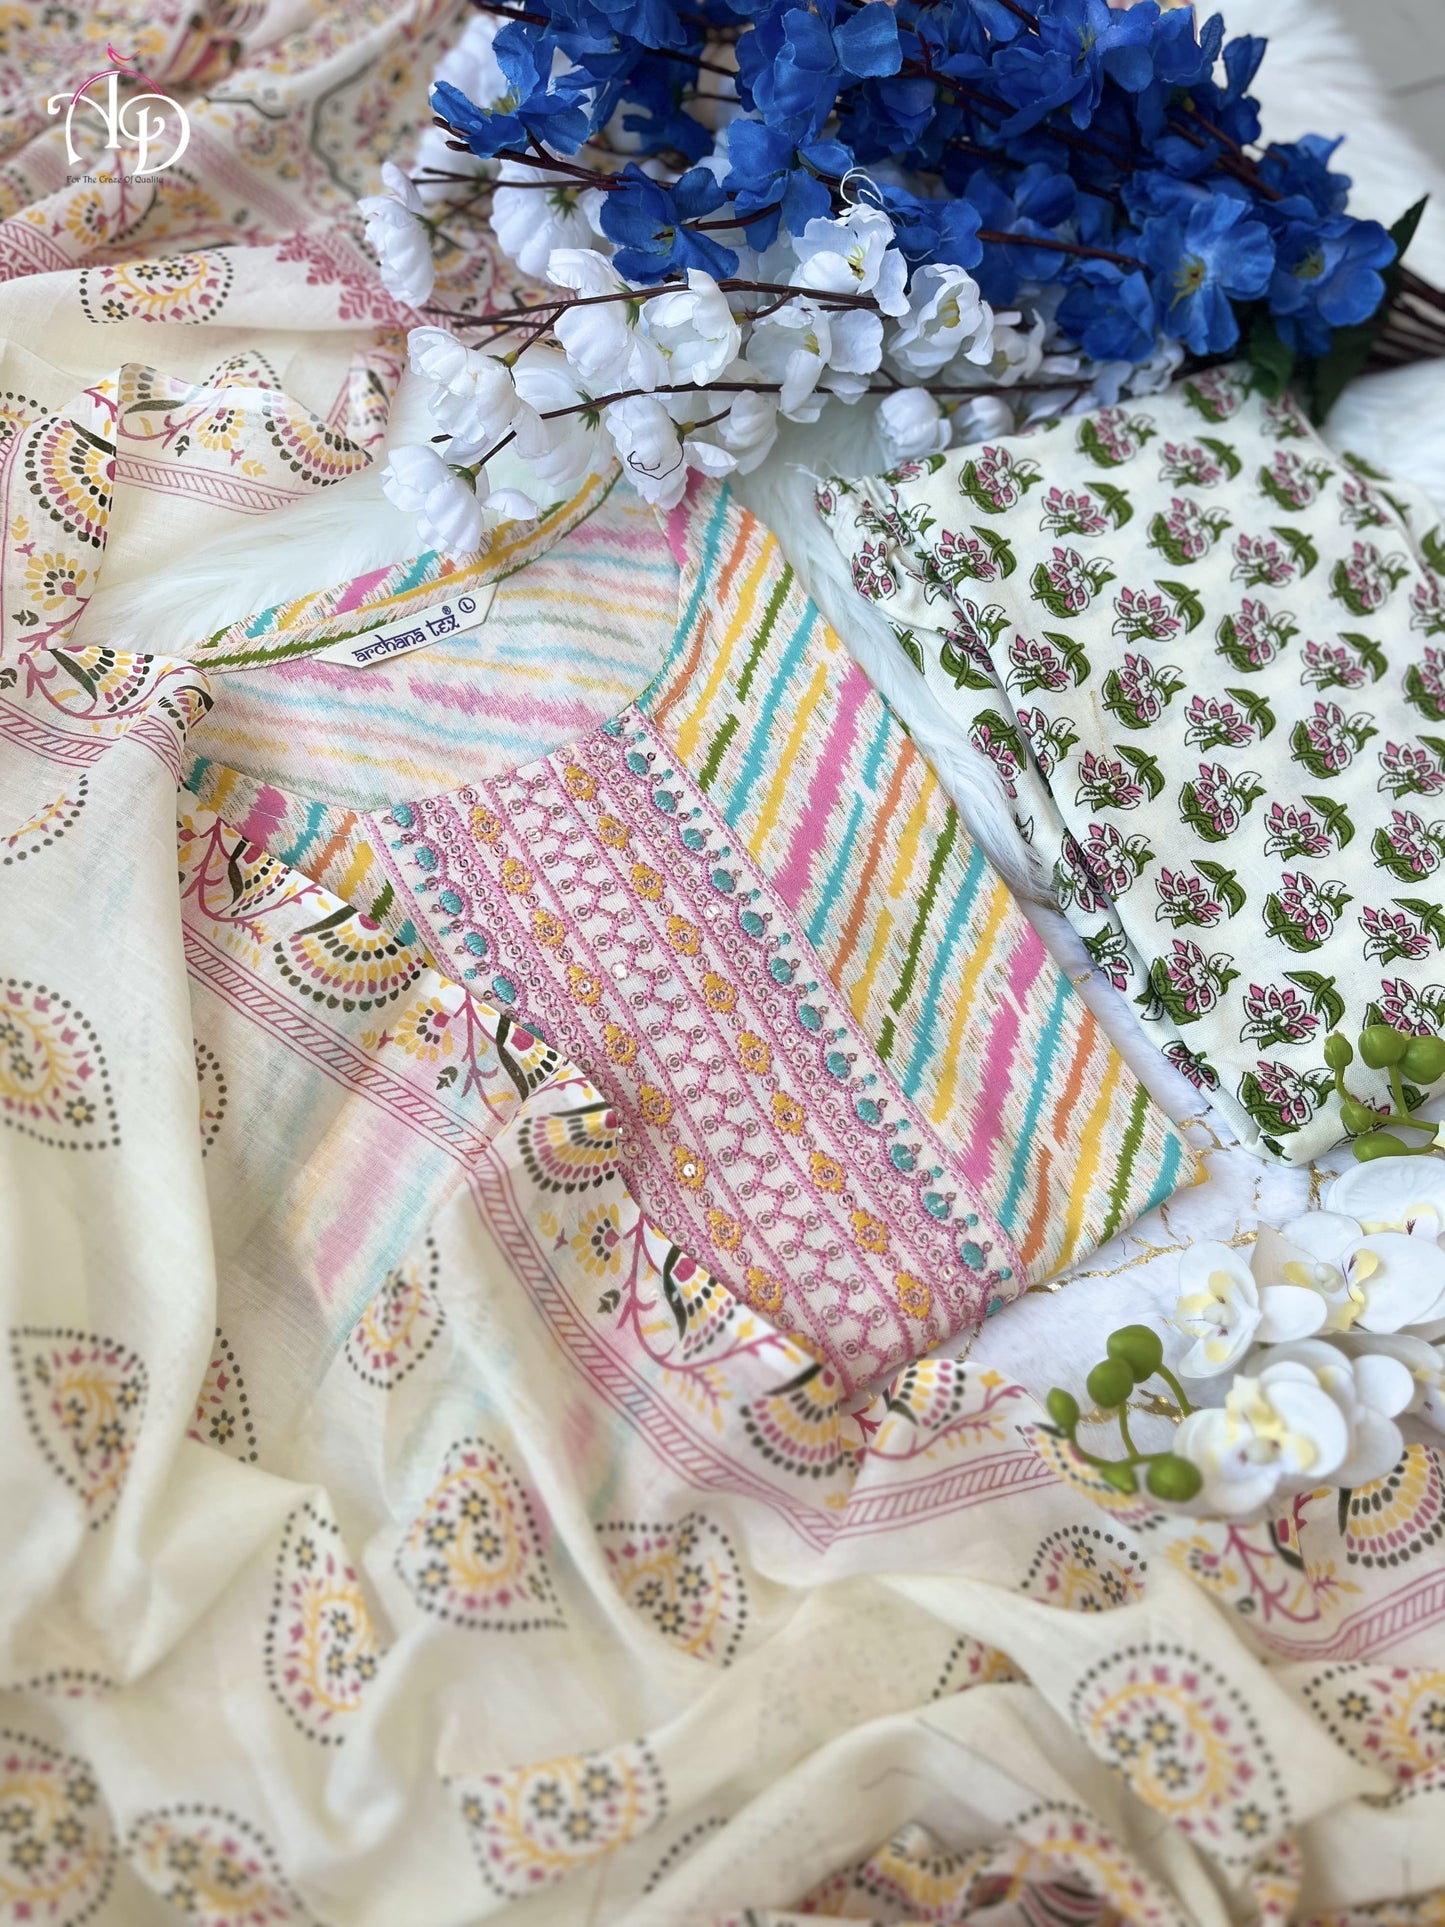 Elegant Cotton Suit Set with Leheriya Print